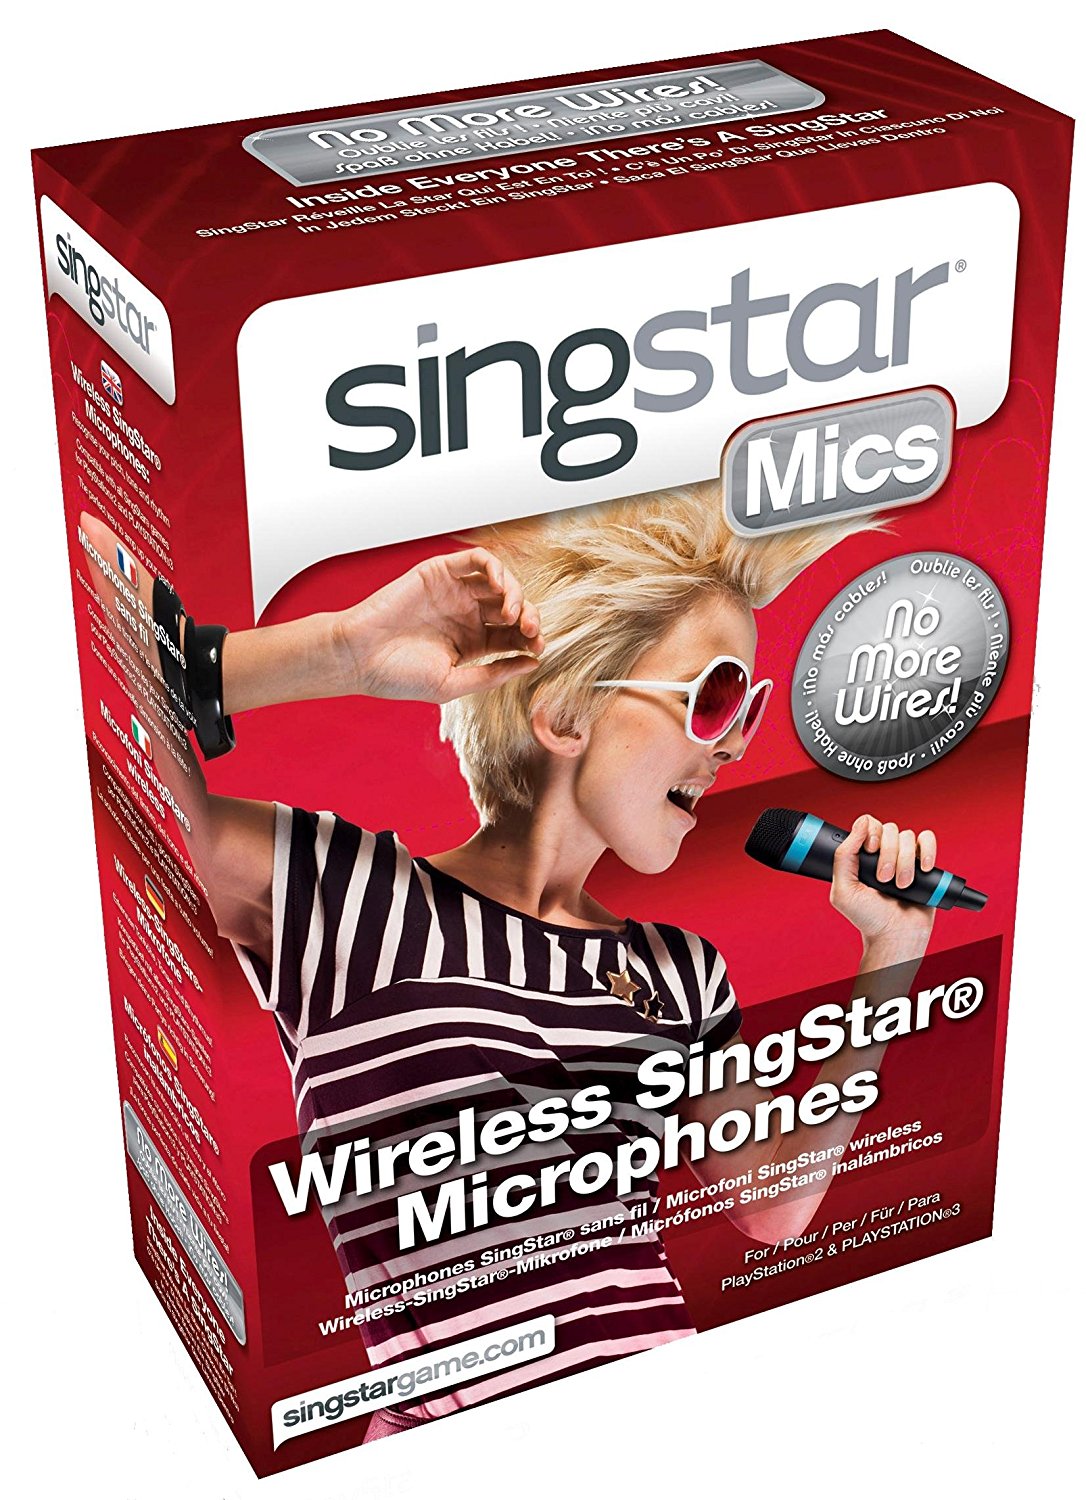 Sony PS3 Wireless Singstar Mikrofone